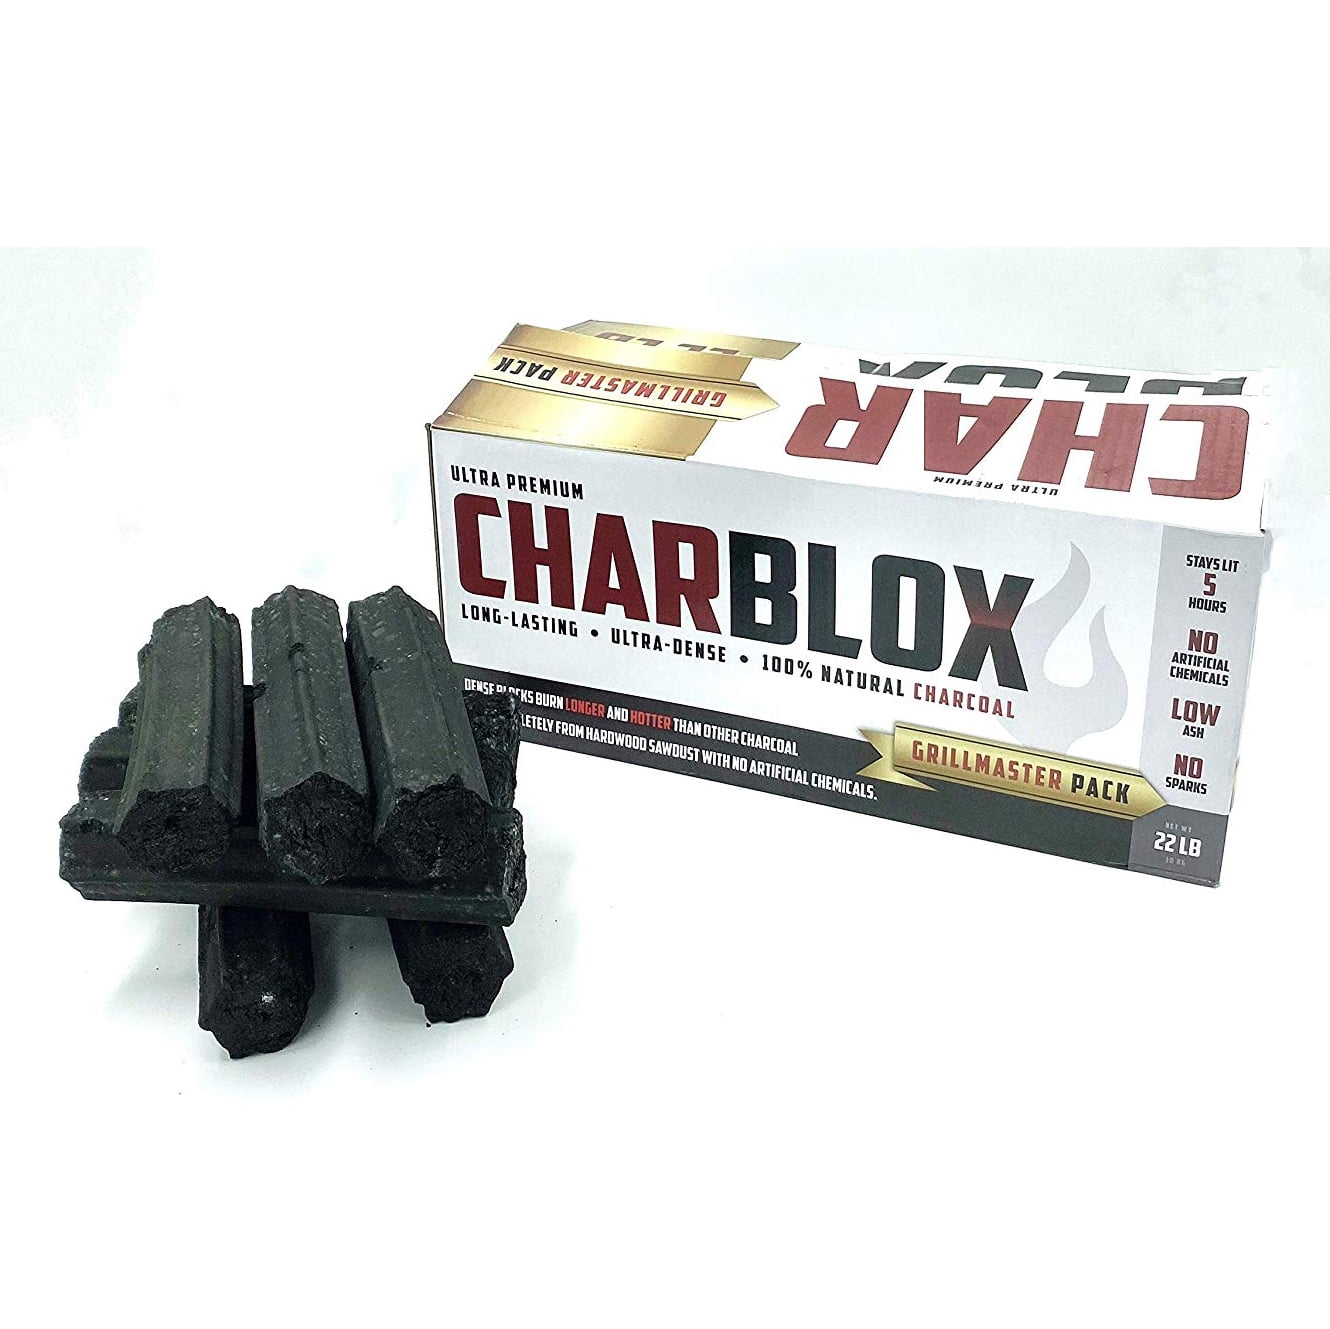 CHARBLOX TEC-00002 Lasting Premium Natural Wood Grilling Charcoal Logs 22 Lbs 